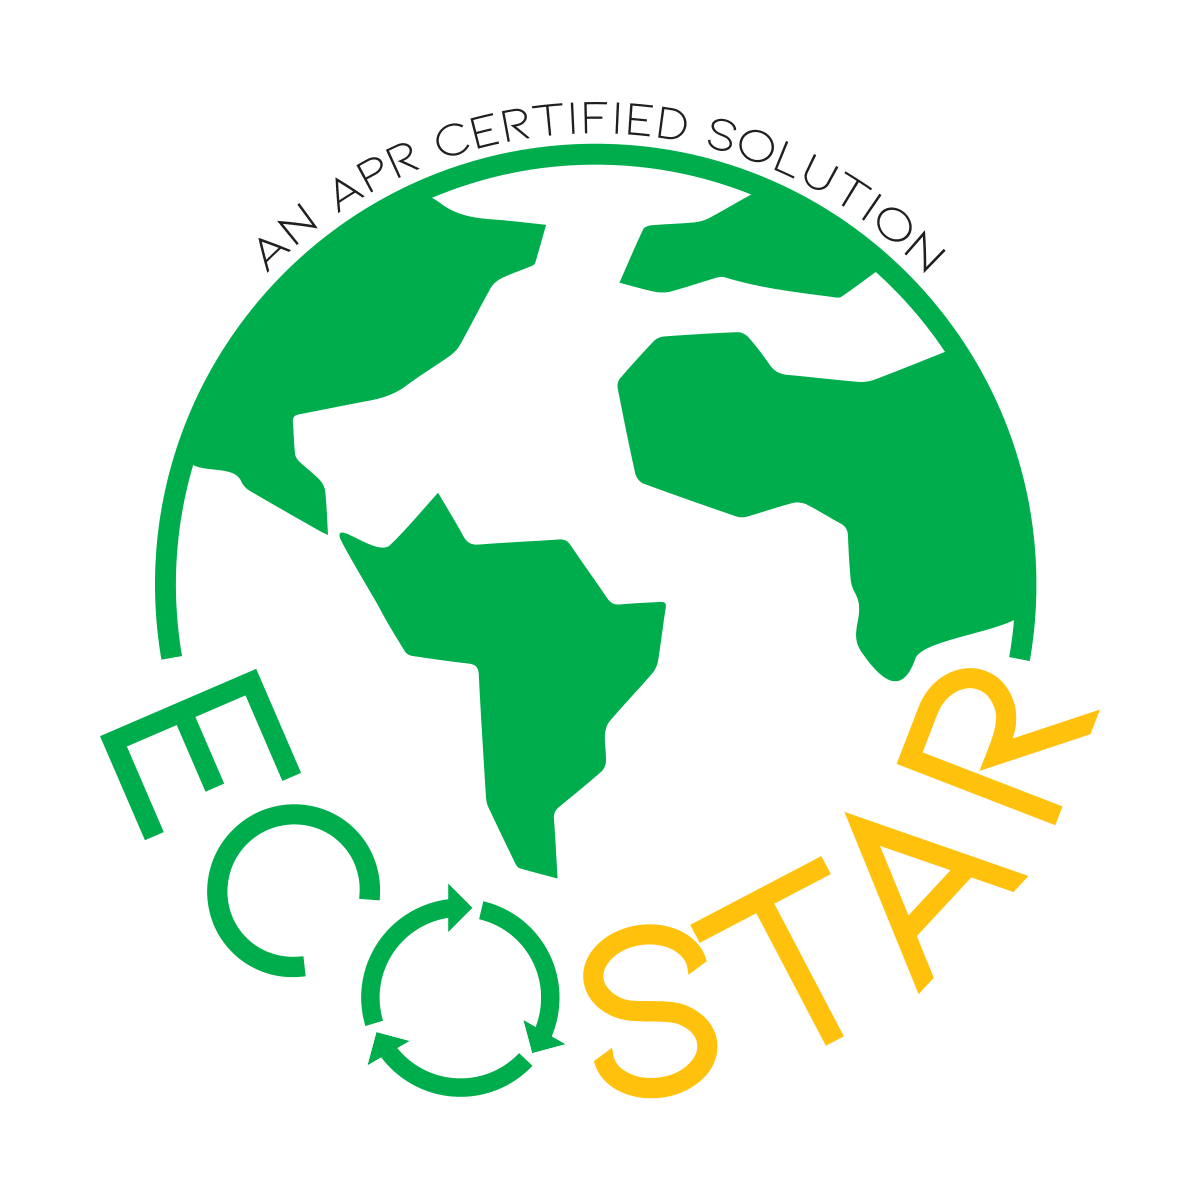 Eco Star